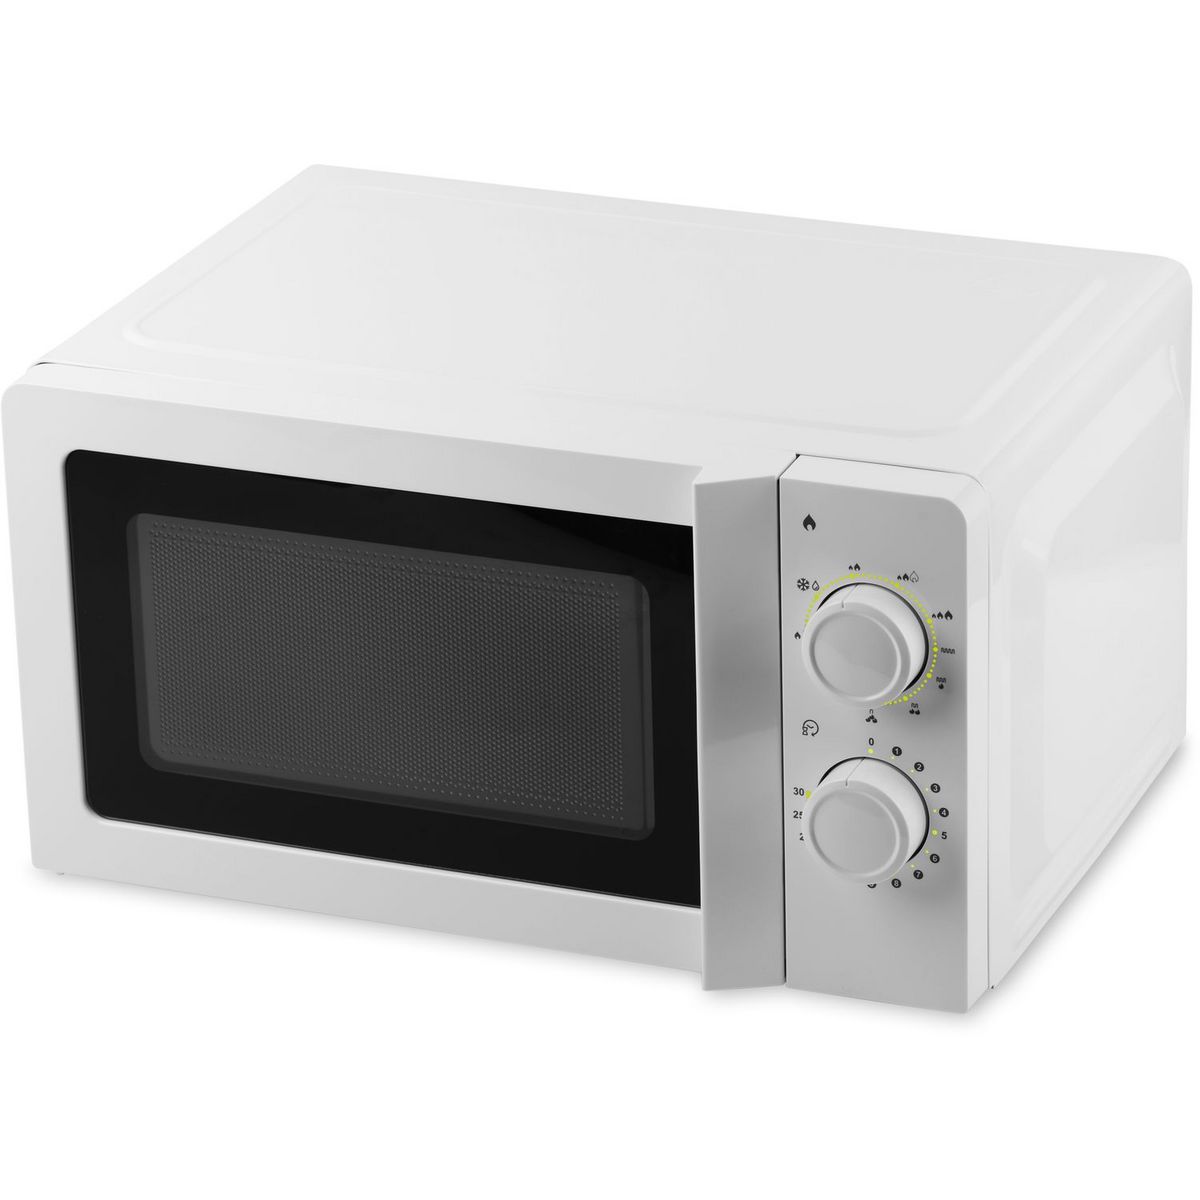 SELECLINE Micro-ondes Grill 152342 - 700 W - Capacité 20 L - Blanc